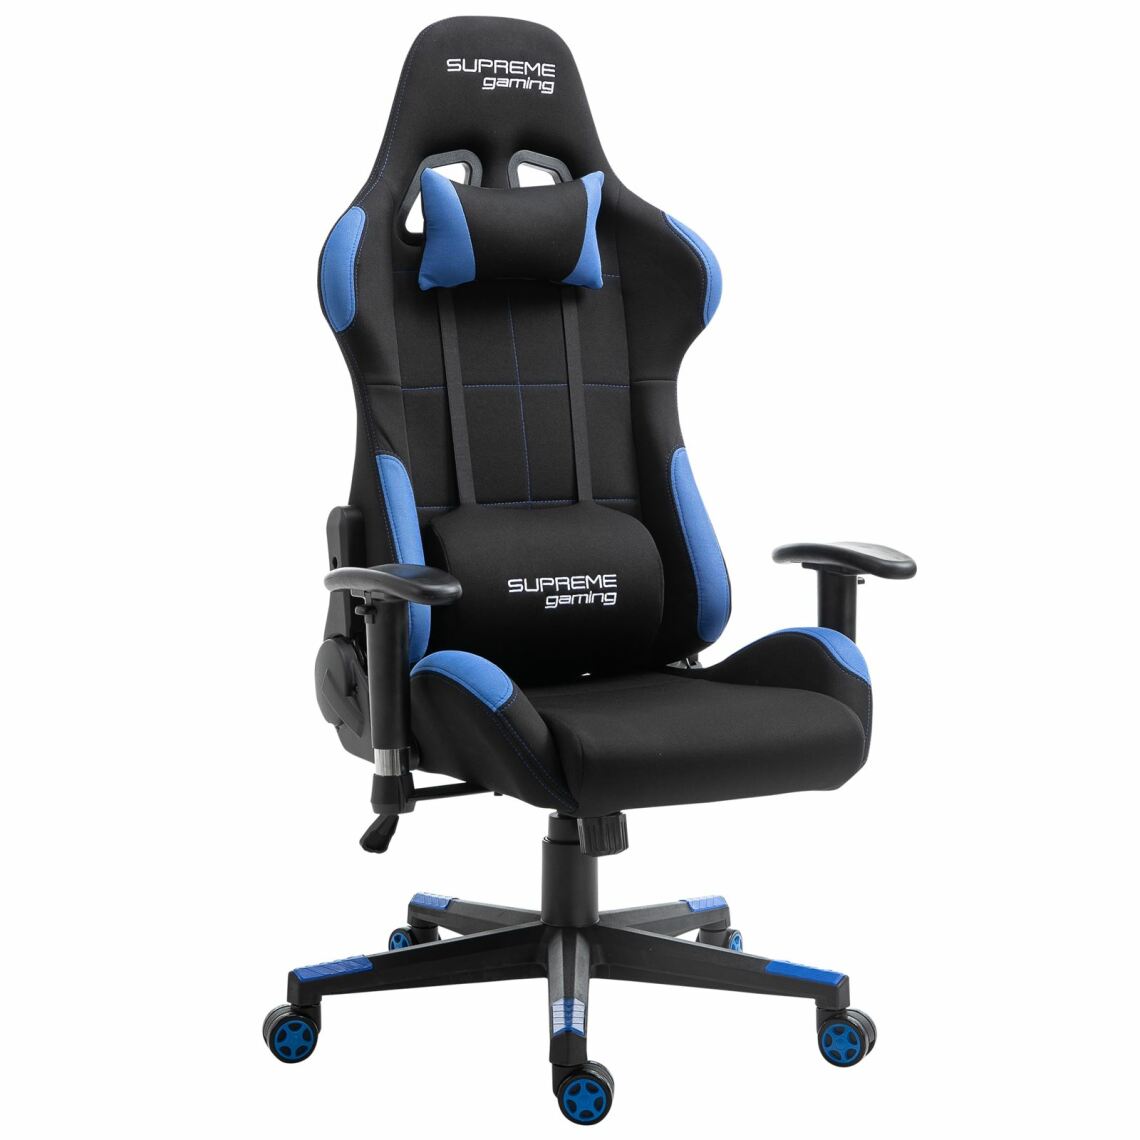 Idimex - Chaise de bureau gaming SWIFT, revêtement en tissu noir et bleu - Chaise gamer